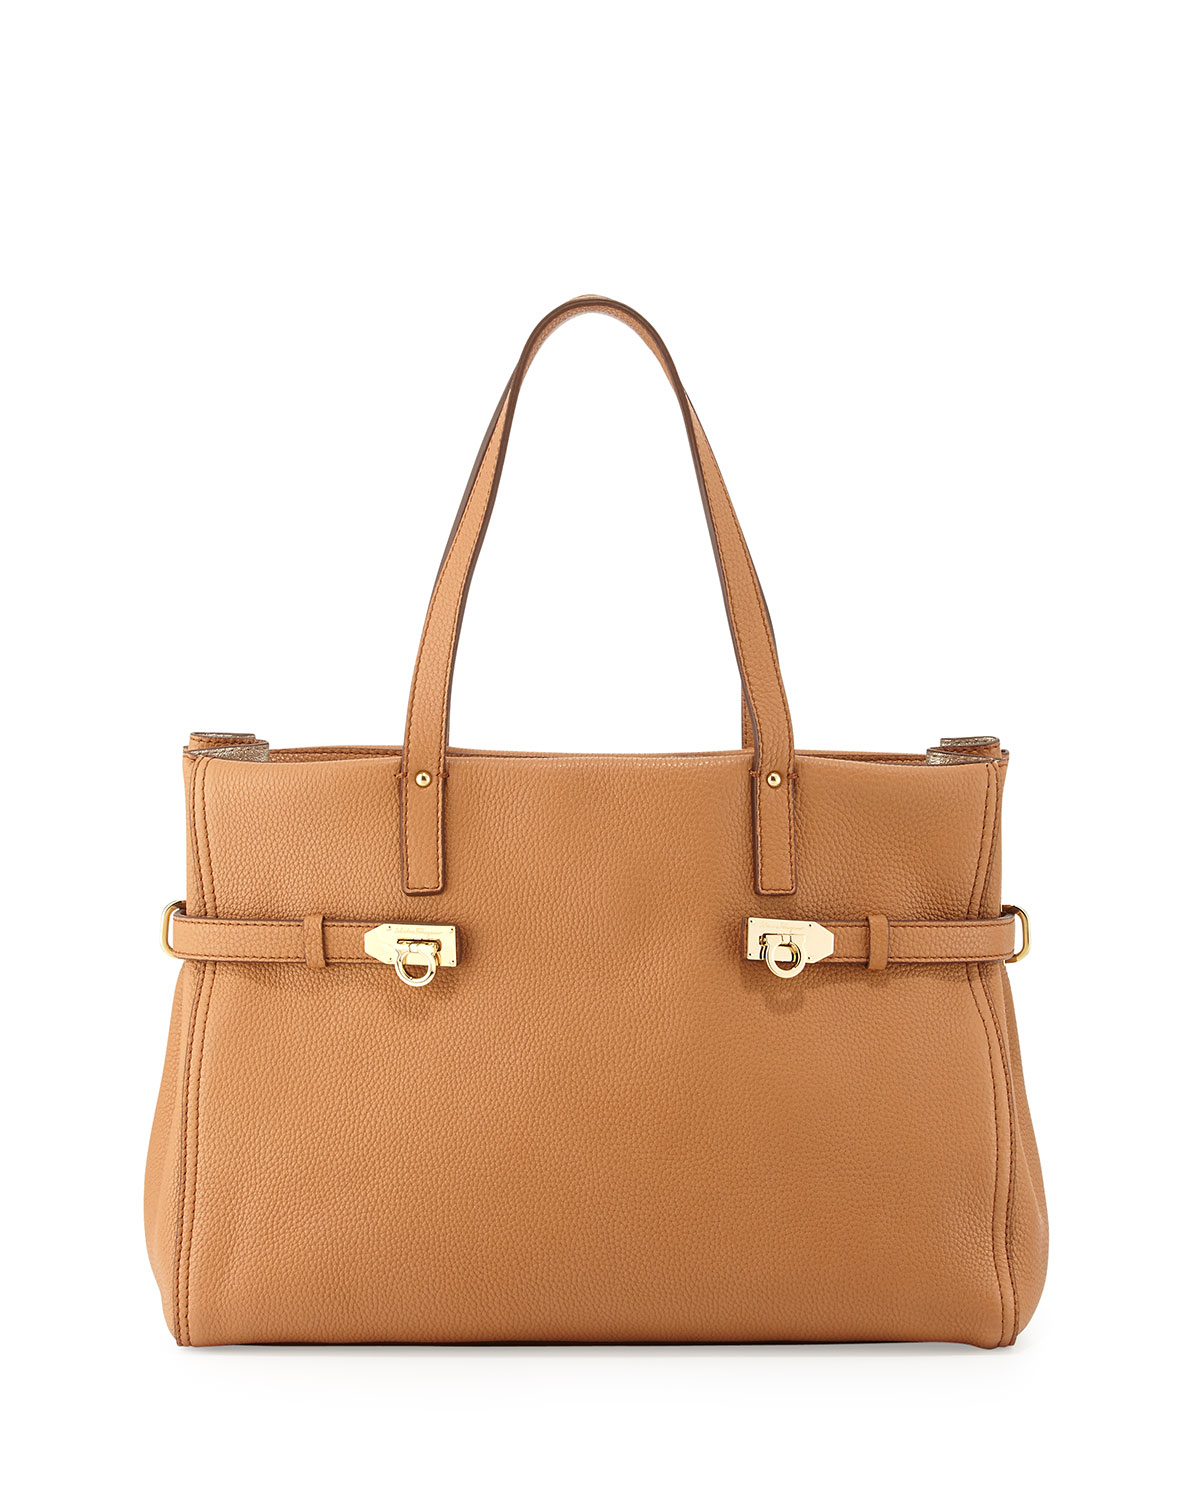 Ferragamo Nencia Gancini Leather Tote Bag in Brown | Lyst